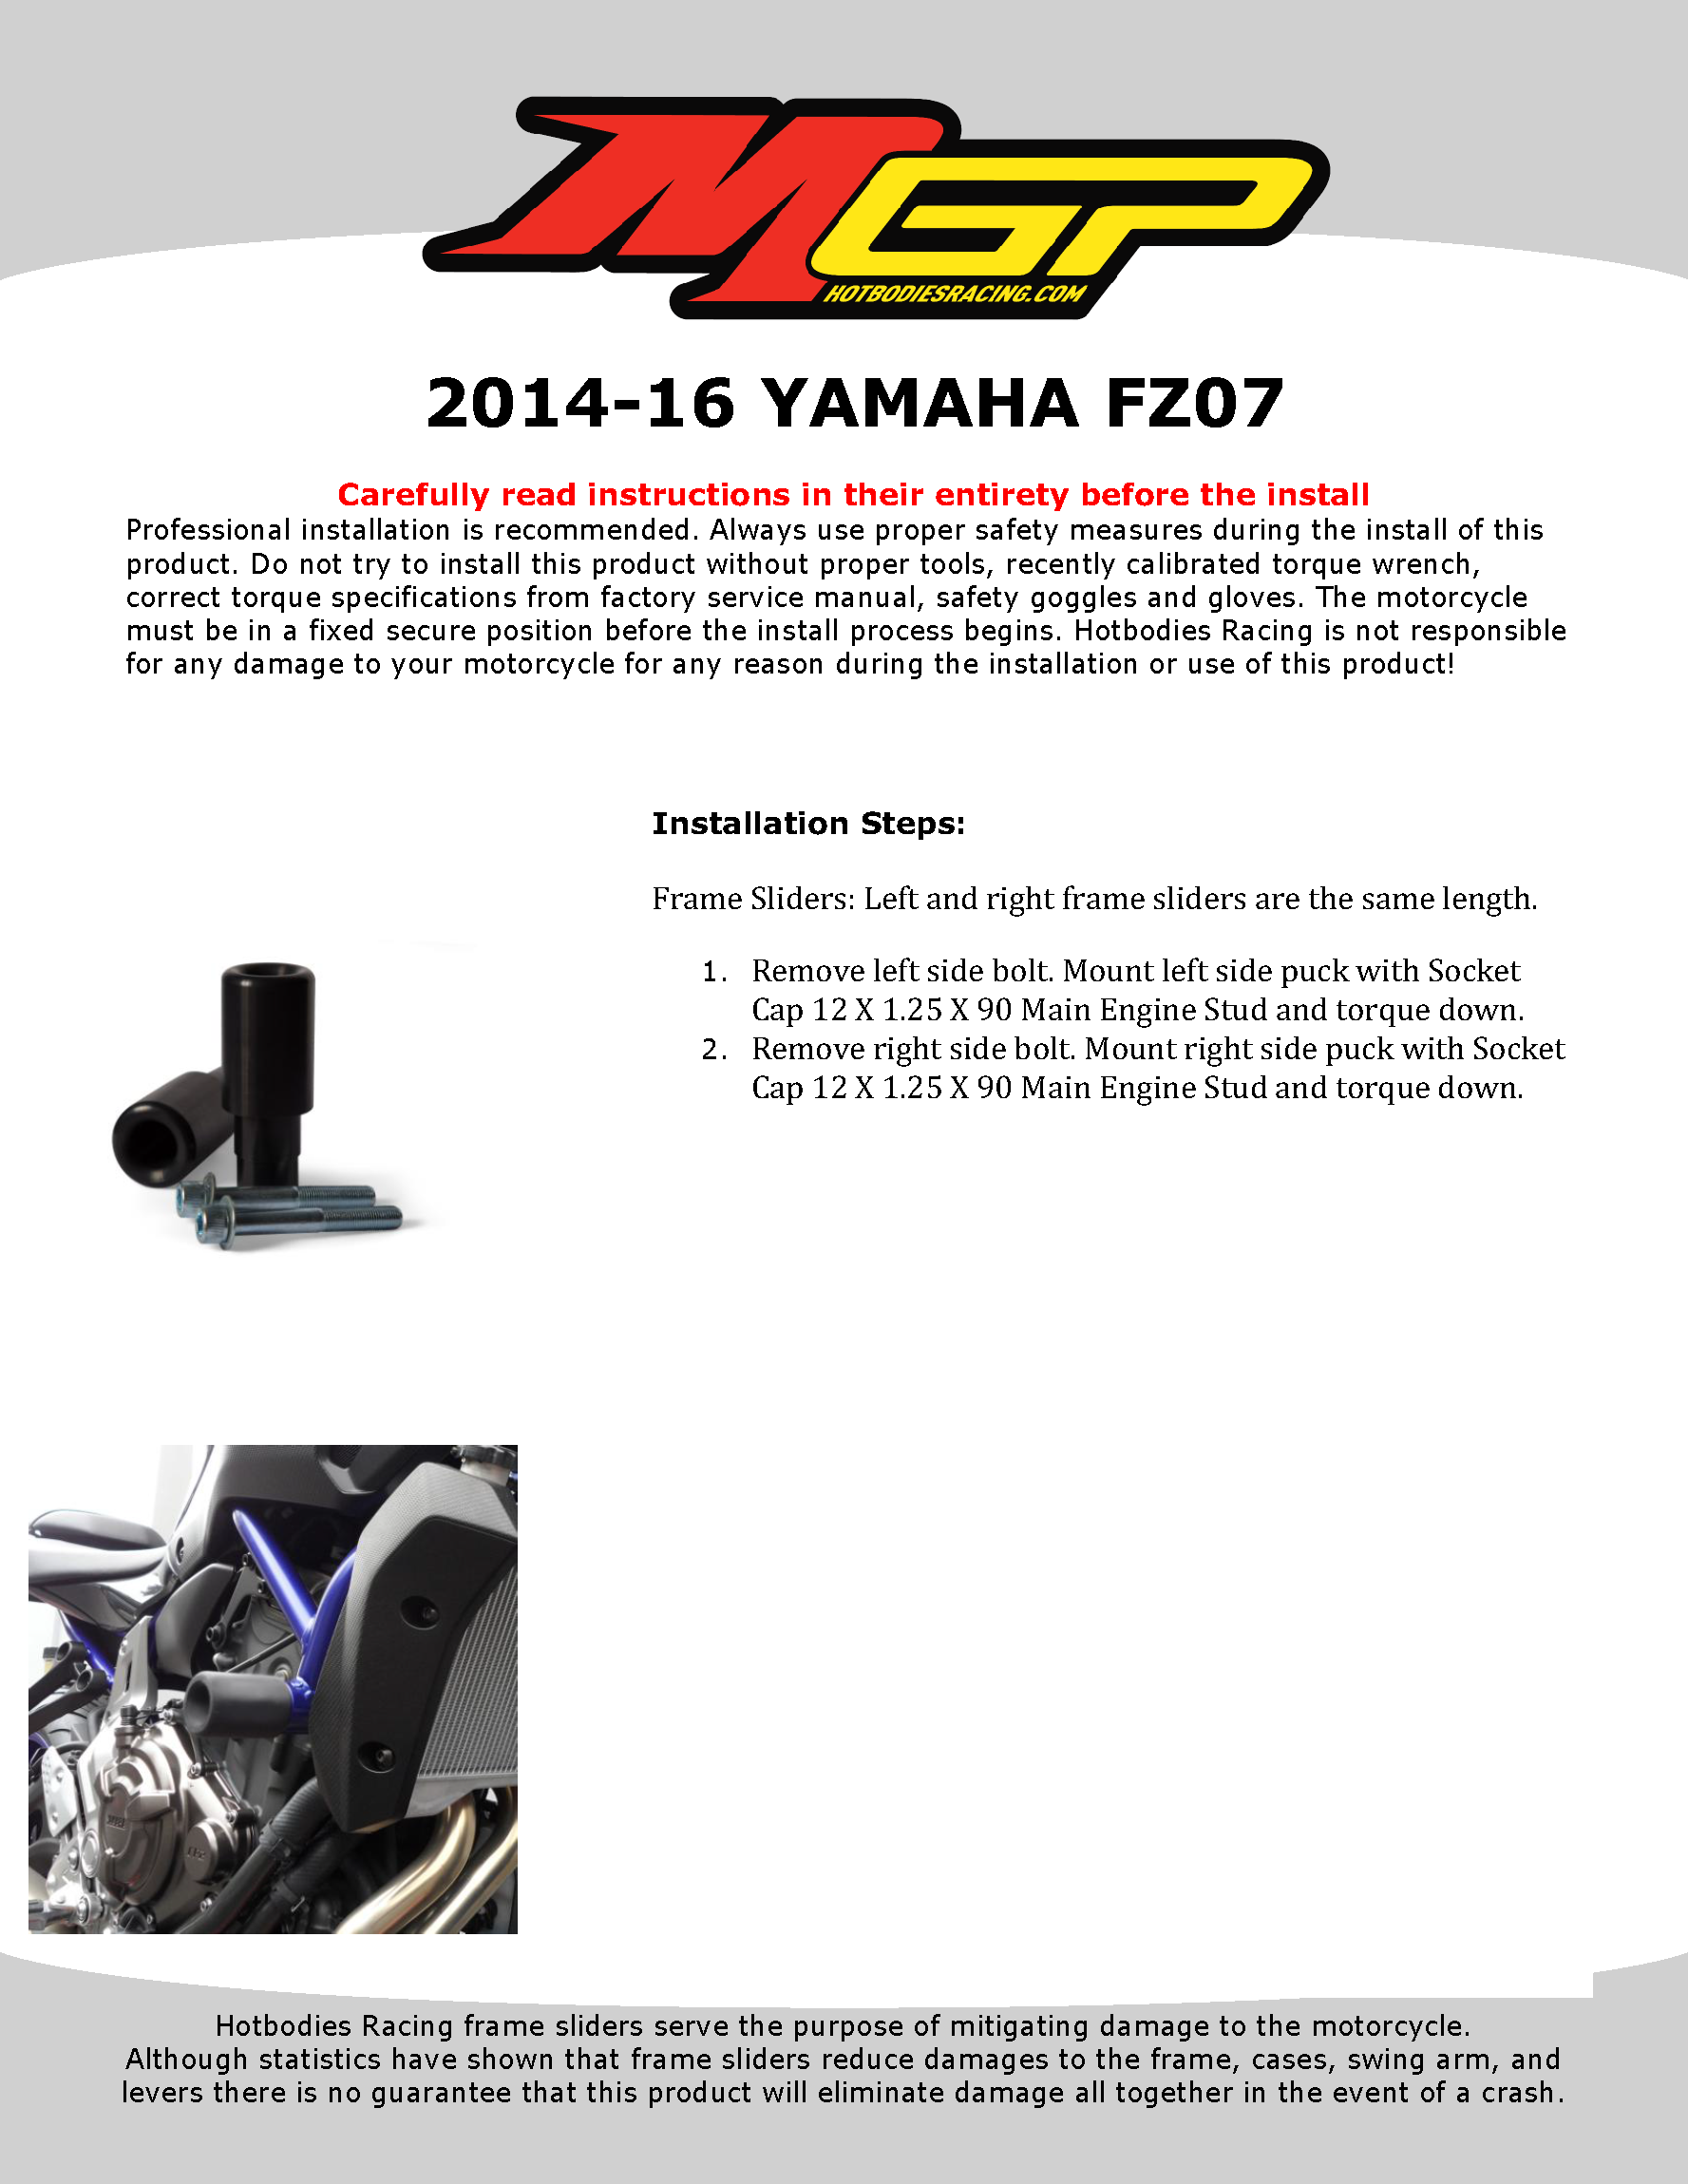 

2014-16 YAMAHA FZ07 Frame Slider Installation

